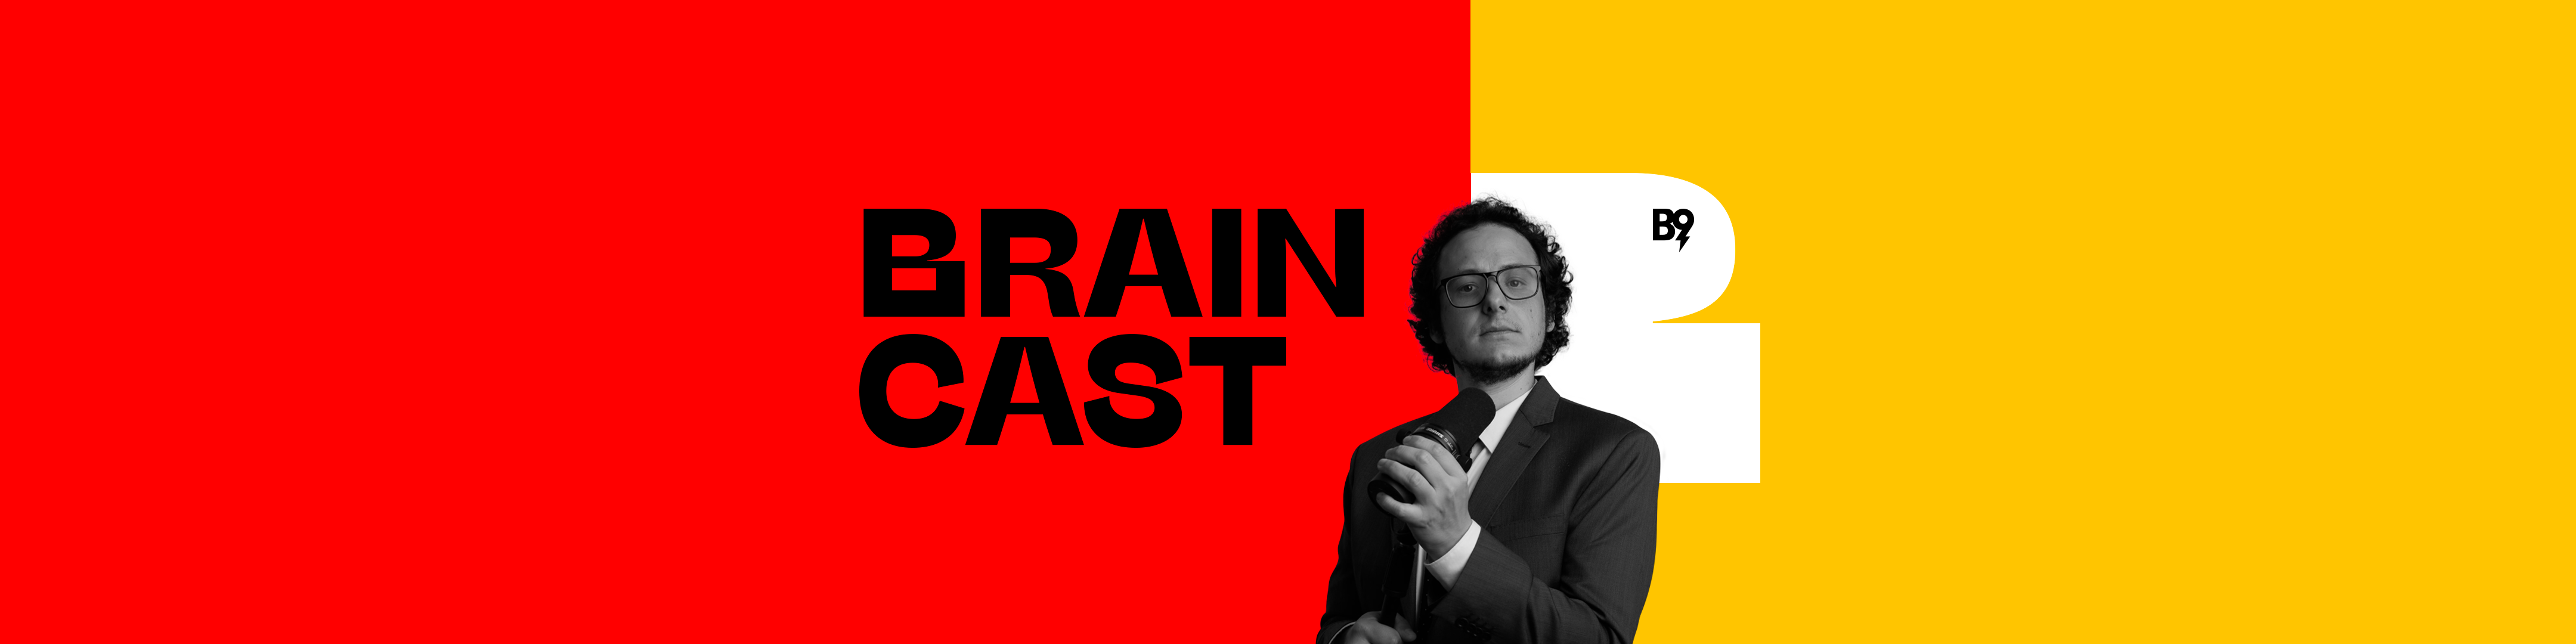 Braincast 438 - Topzera 2021 • B9